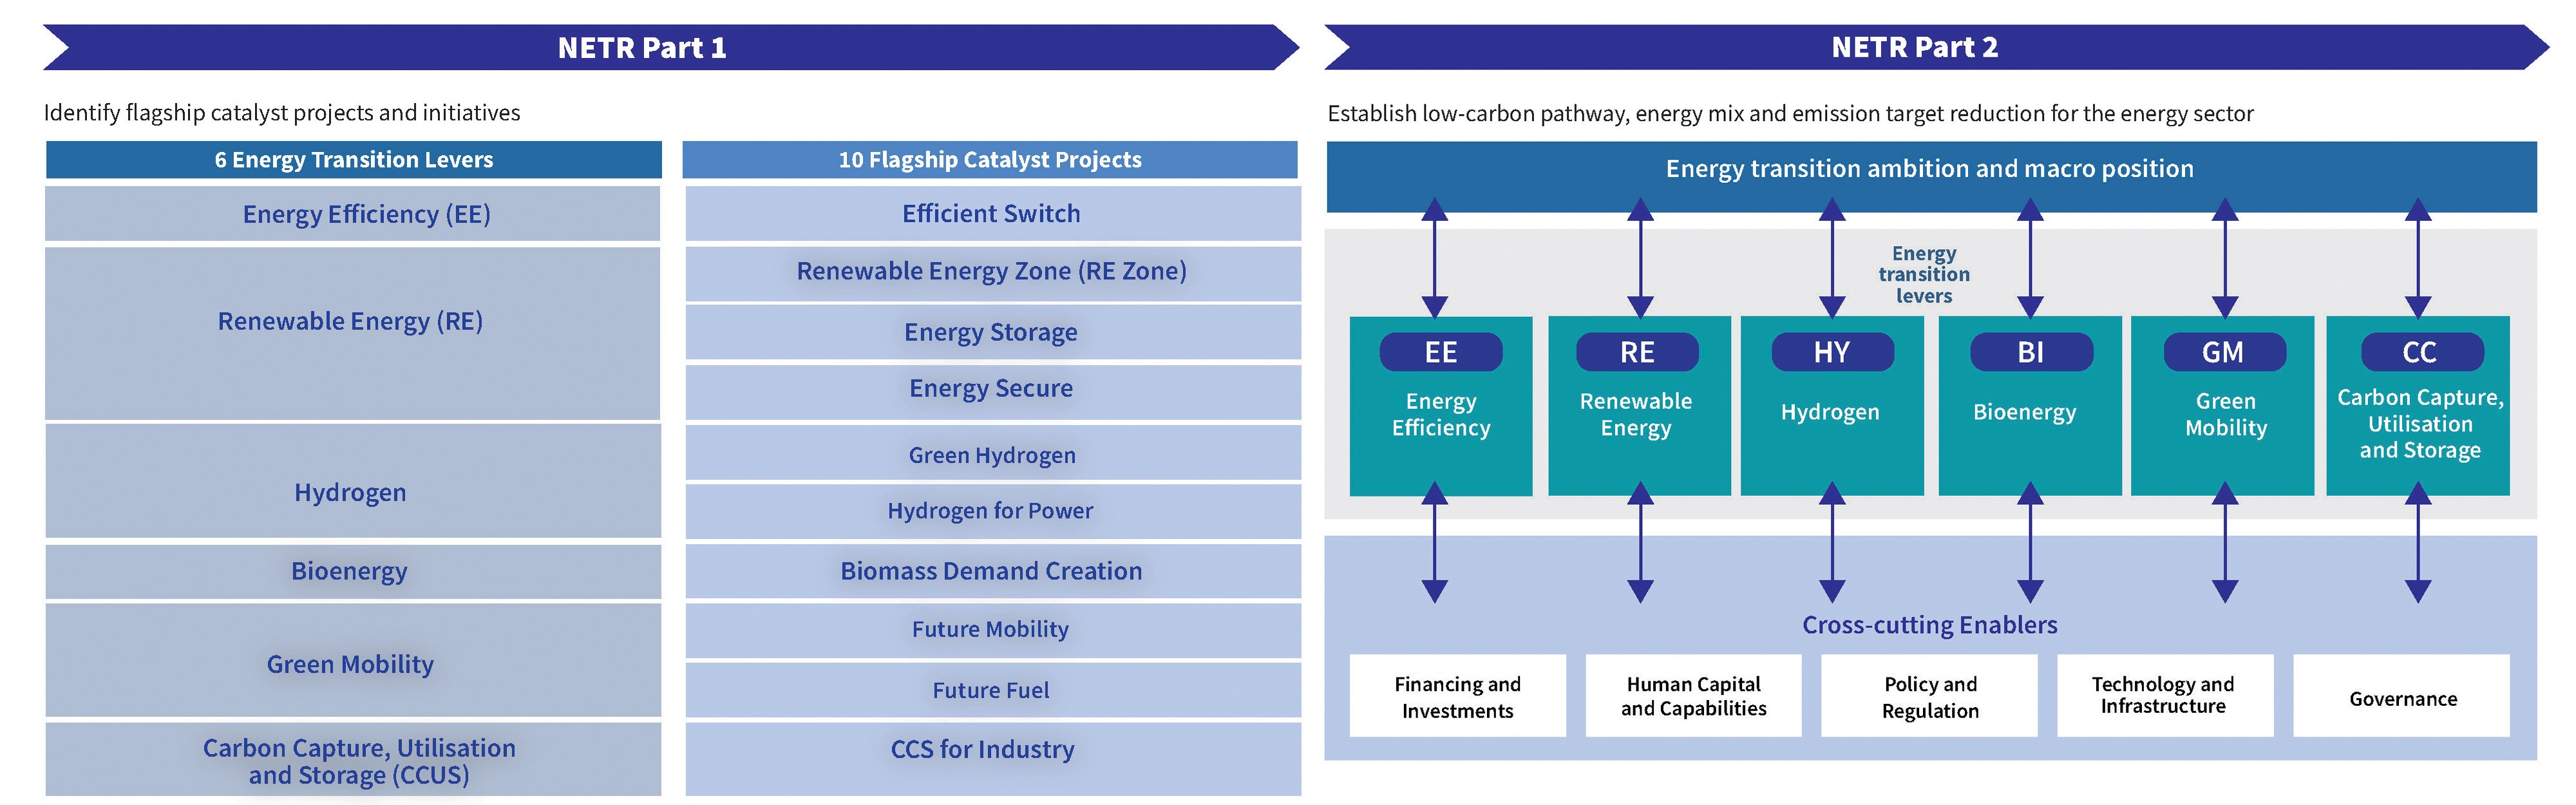 National Energy Transition Roadmap (NETR) development (Part 1 & 2) Source: NETR